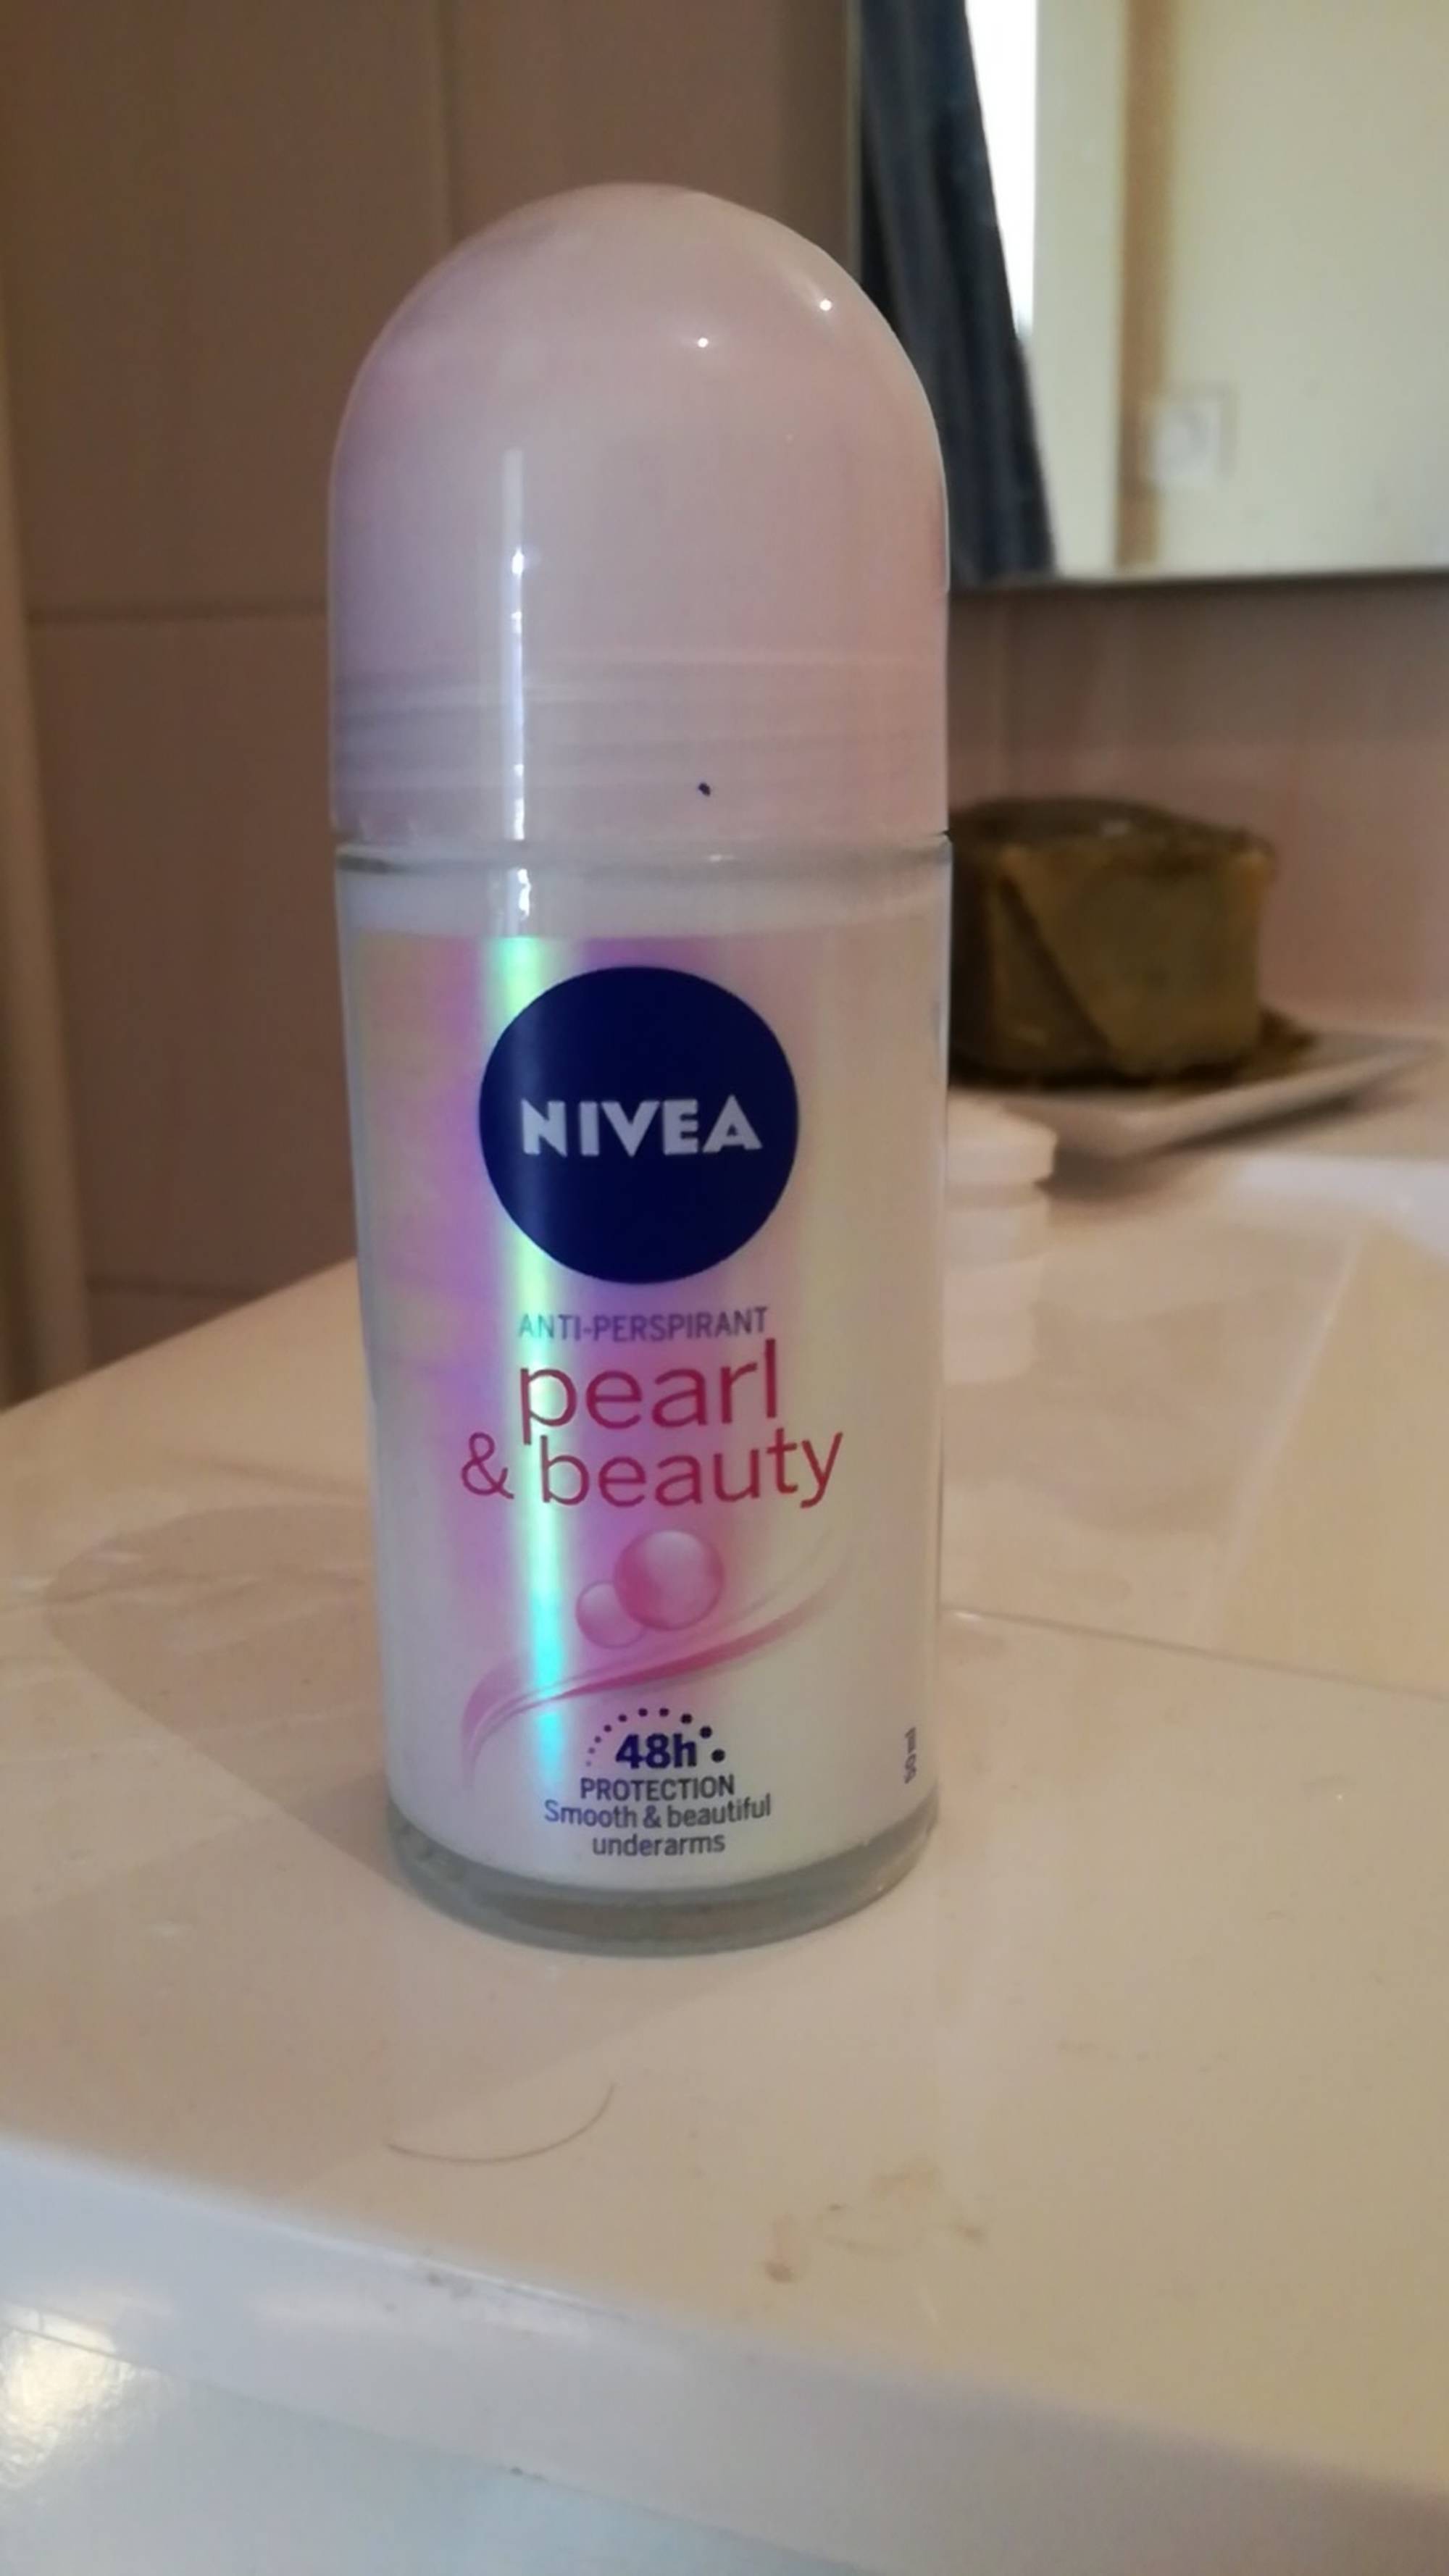 NIVEA - Pearl & beauty - Déodorant anti-perspirant 48h